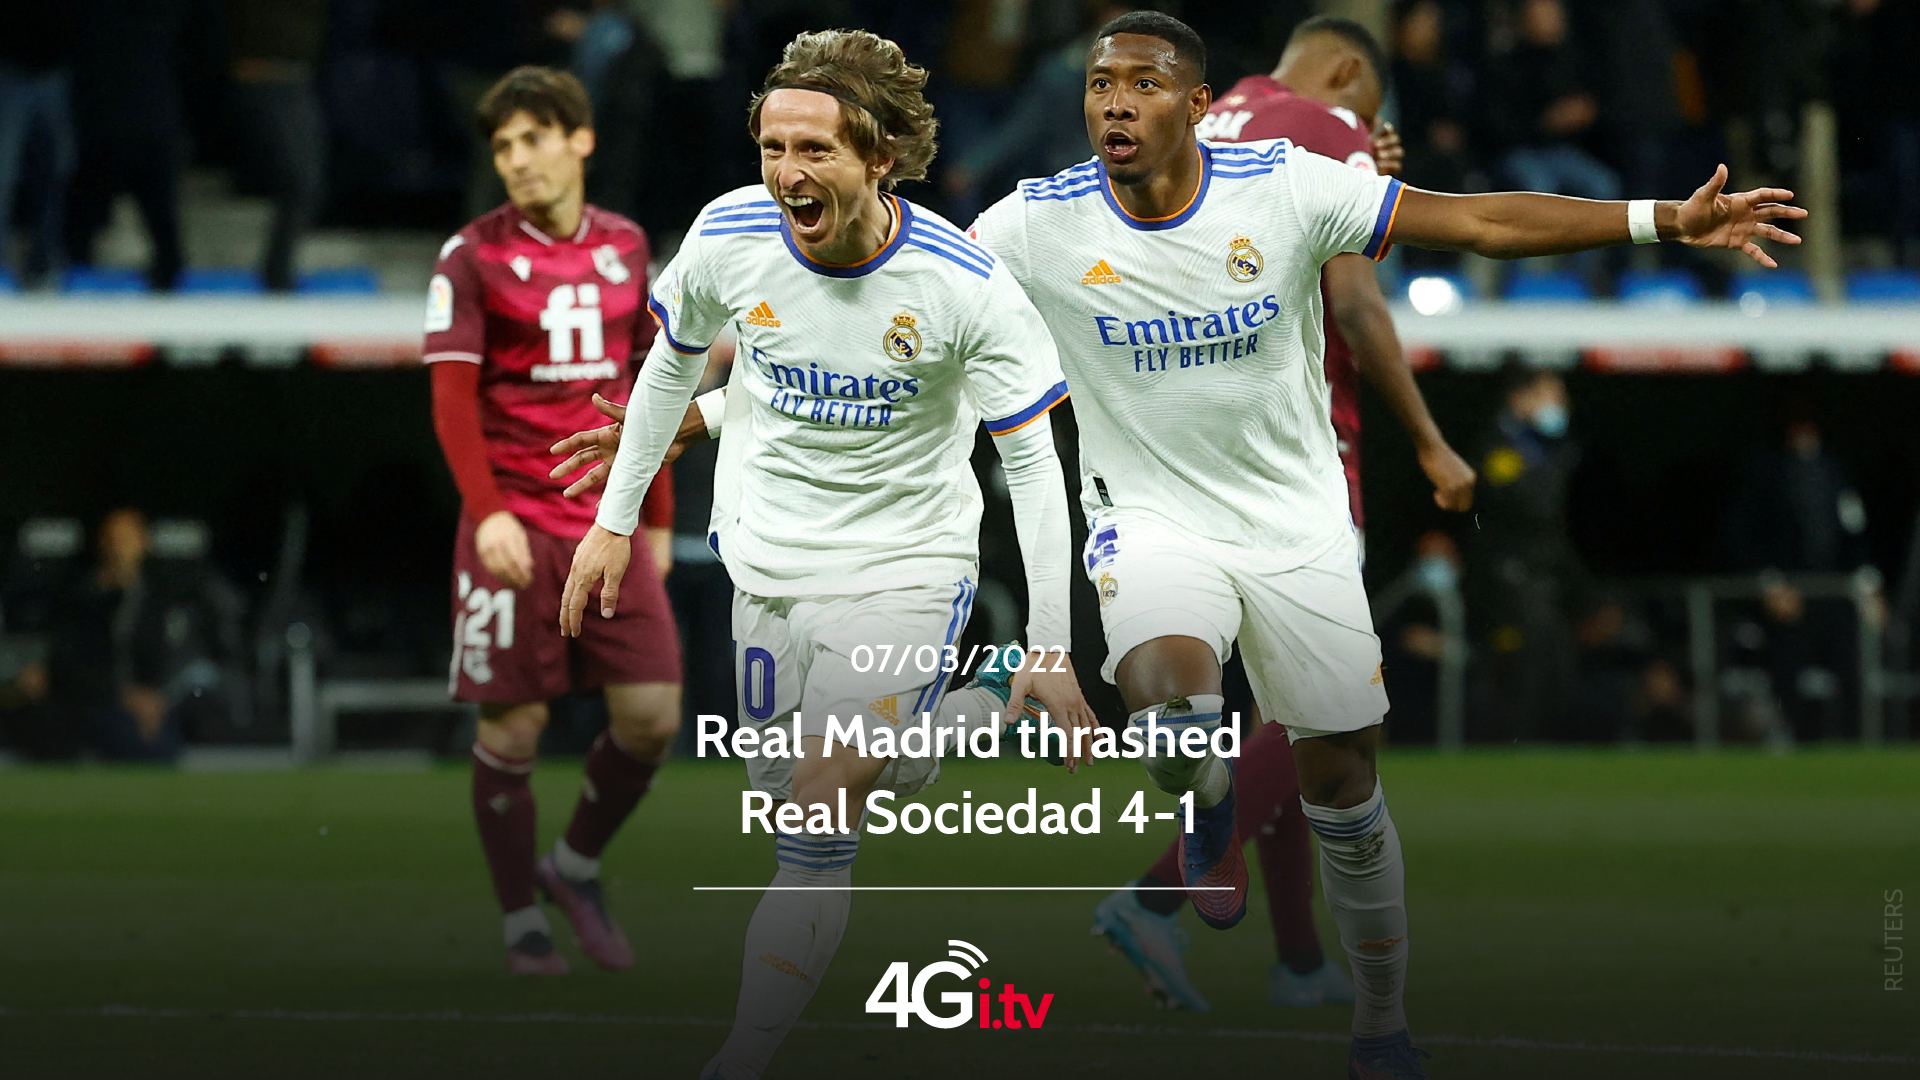 Lesen Sie mehr über den Artikel Real Madrid thrashed Real Sociedad 4-1